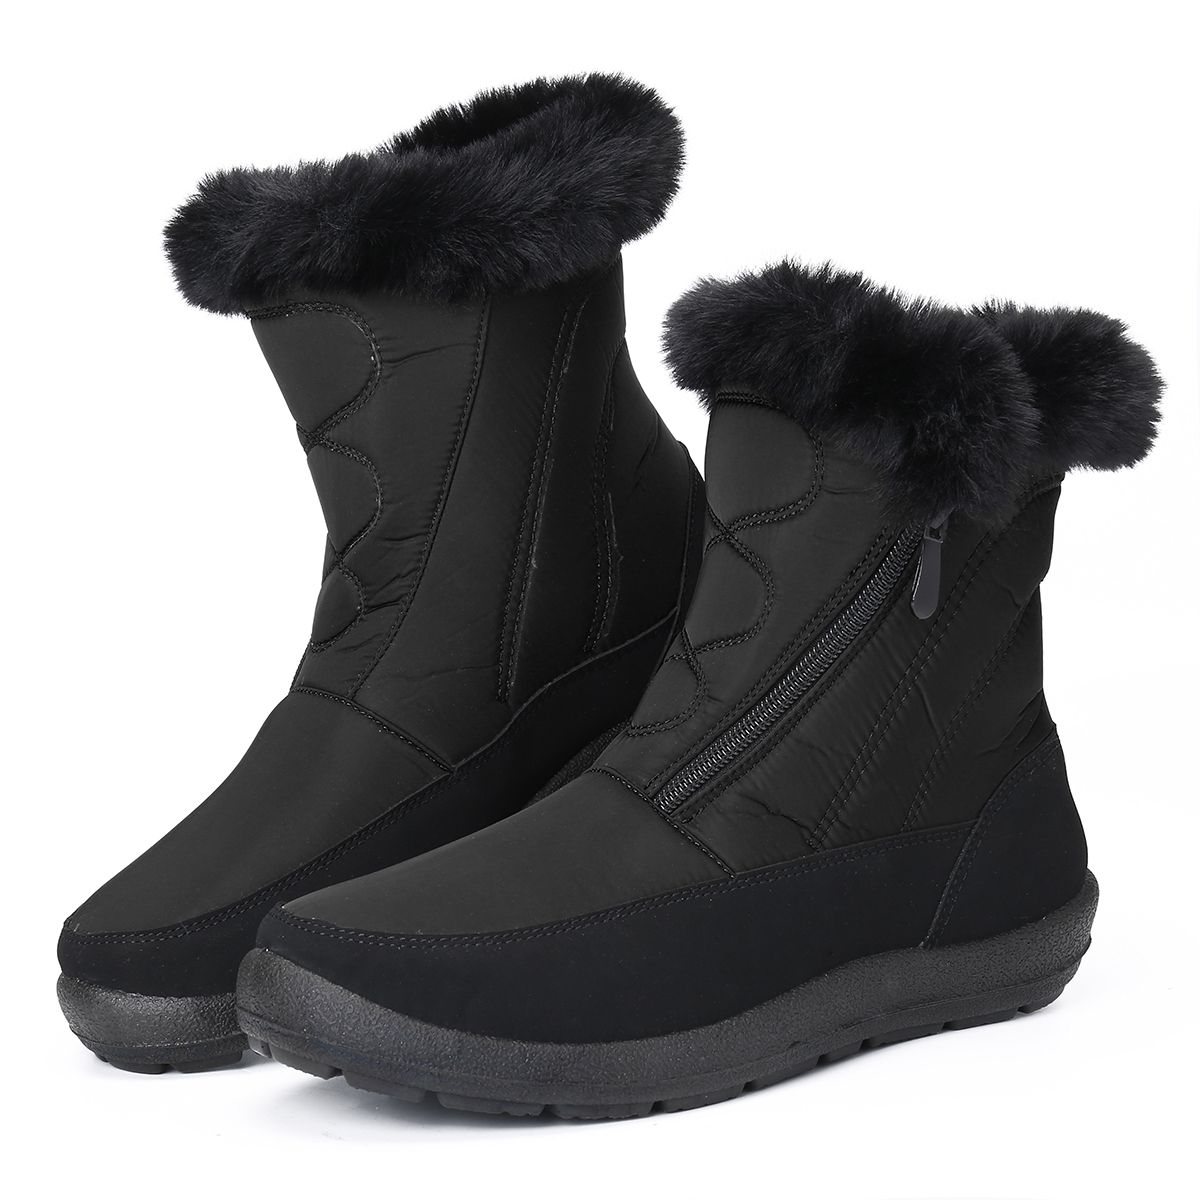 gracosy Unisex Snow Boots, Winter Fur Lined Warm Outdoor Comfort ...